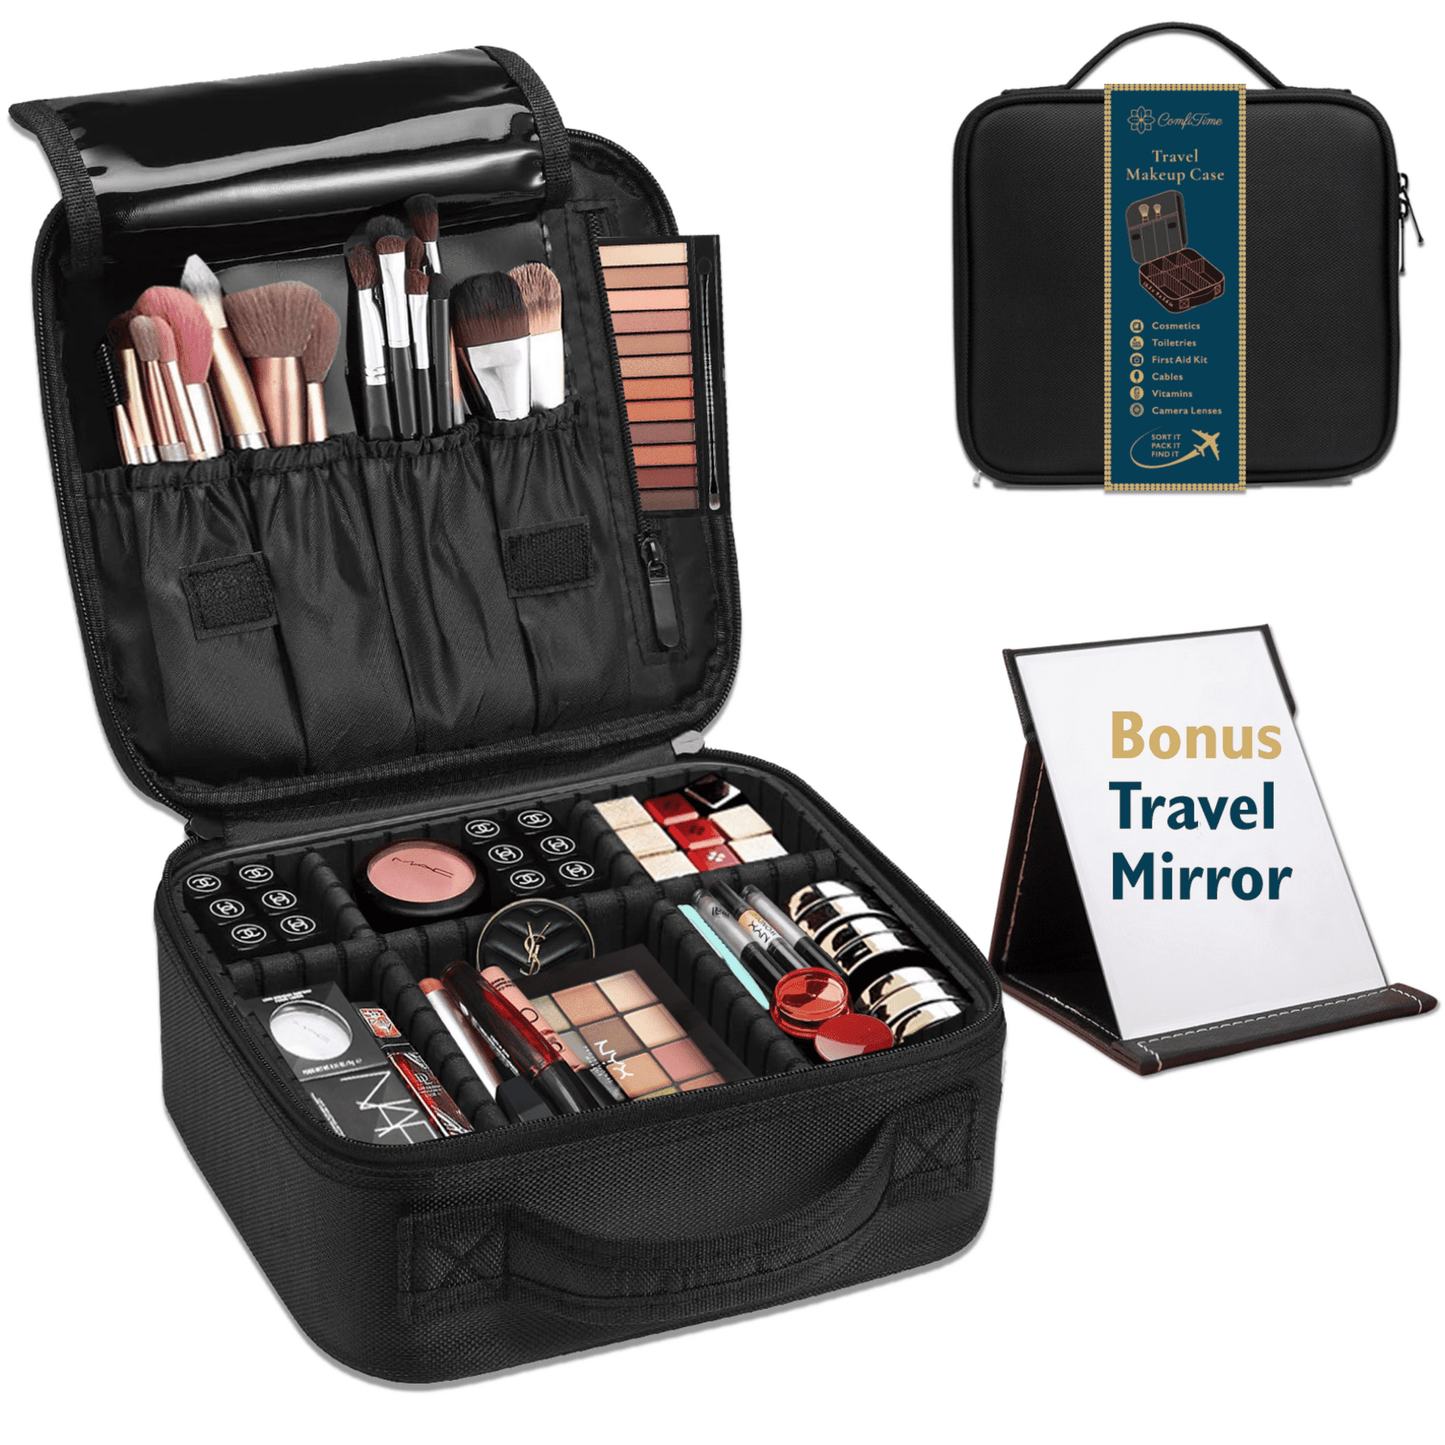 Customizable Makeup Case With Bonus Travel Mirror